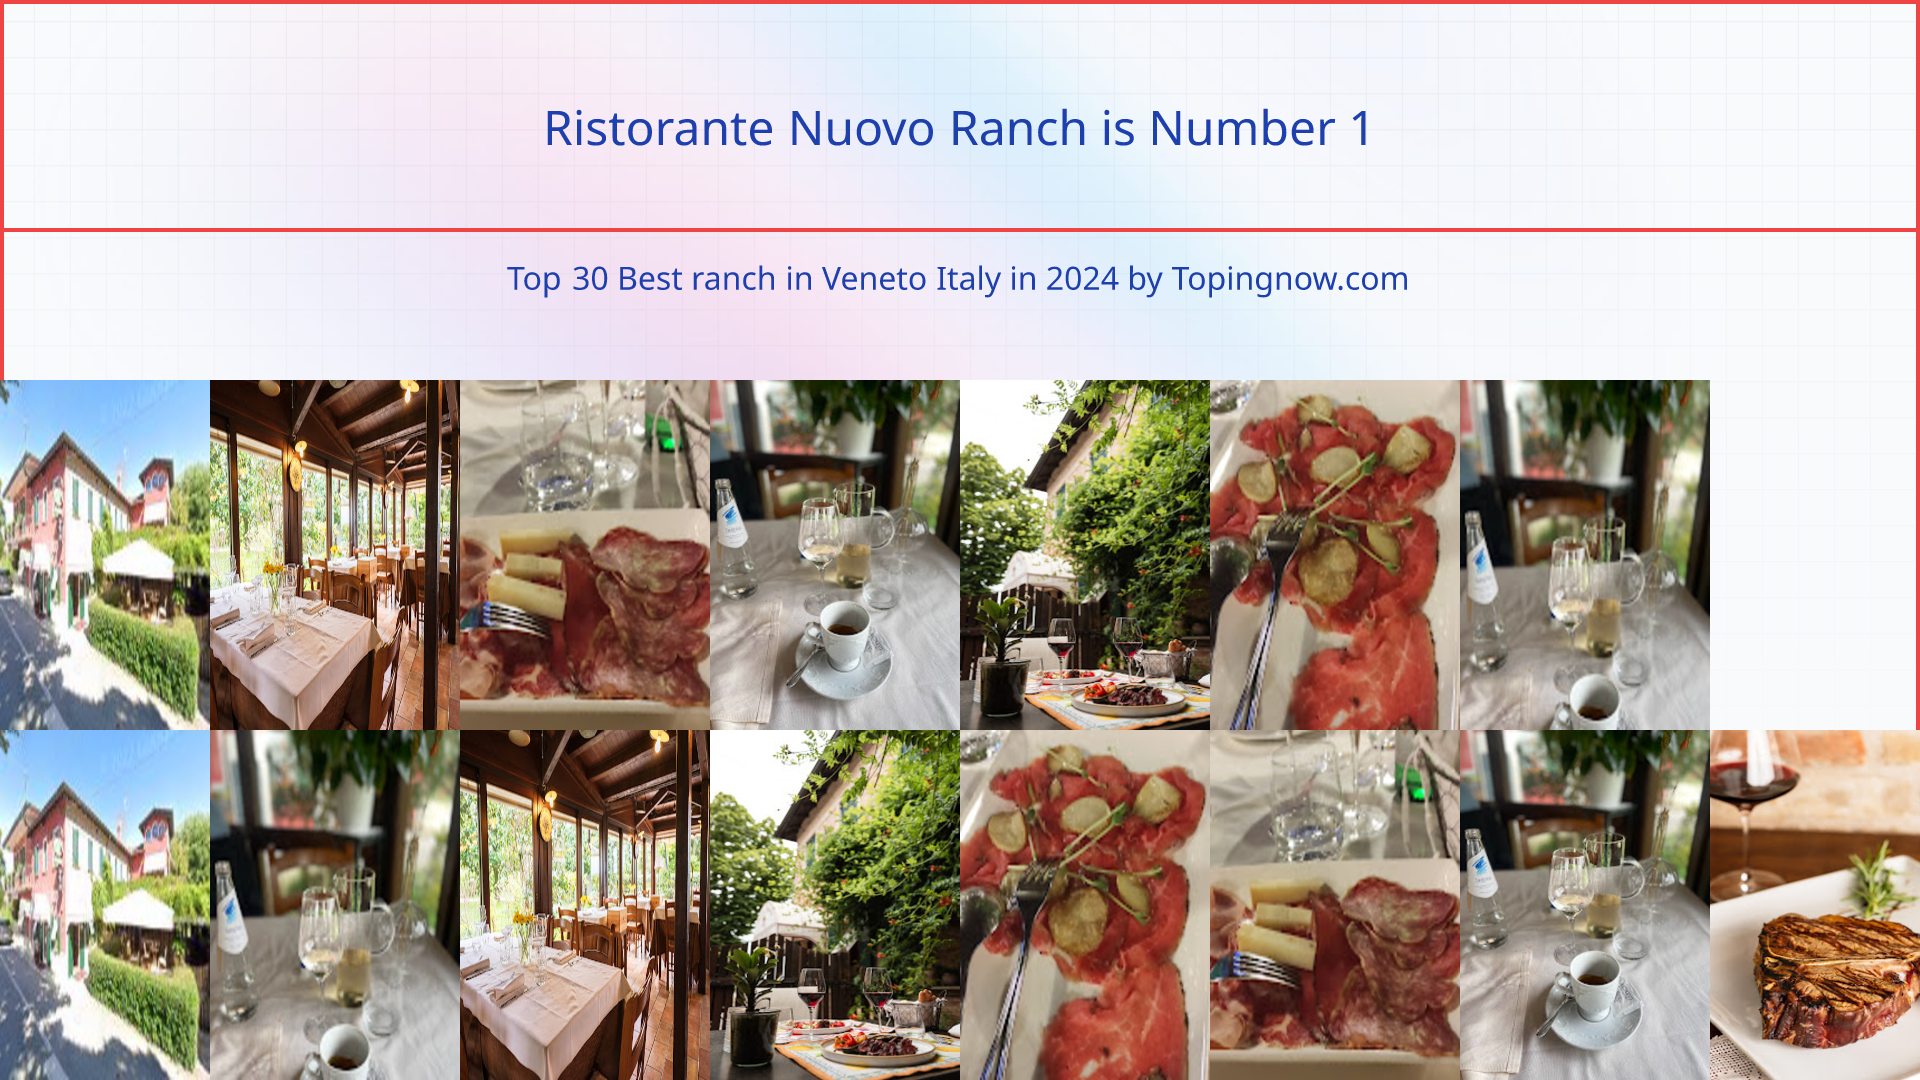 Ristorante Nuovo Ranch: Top 30 Best ranch in Veneto Italy in 2024